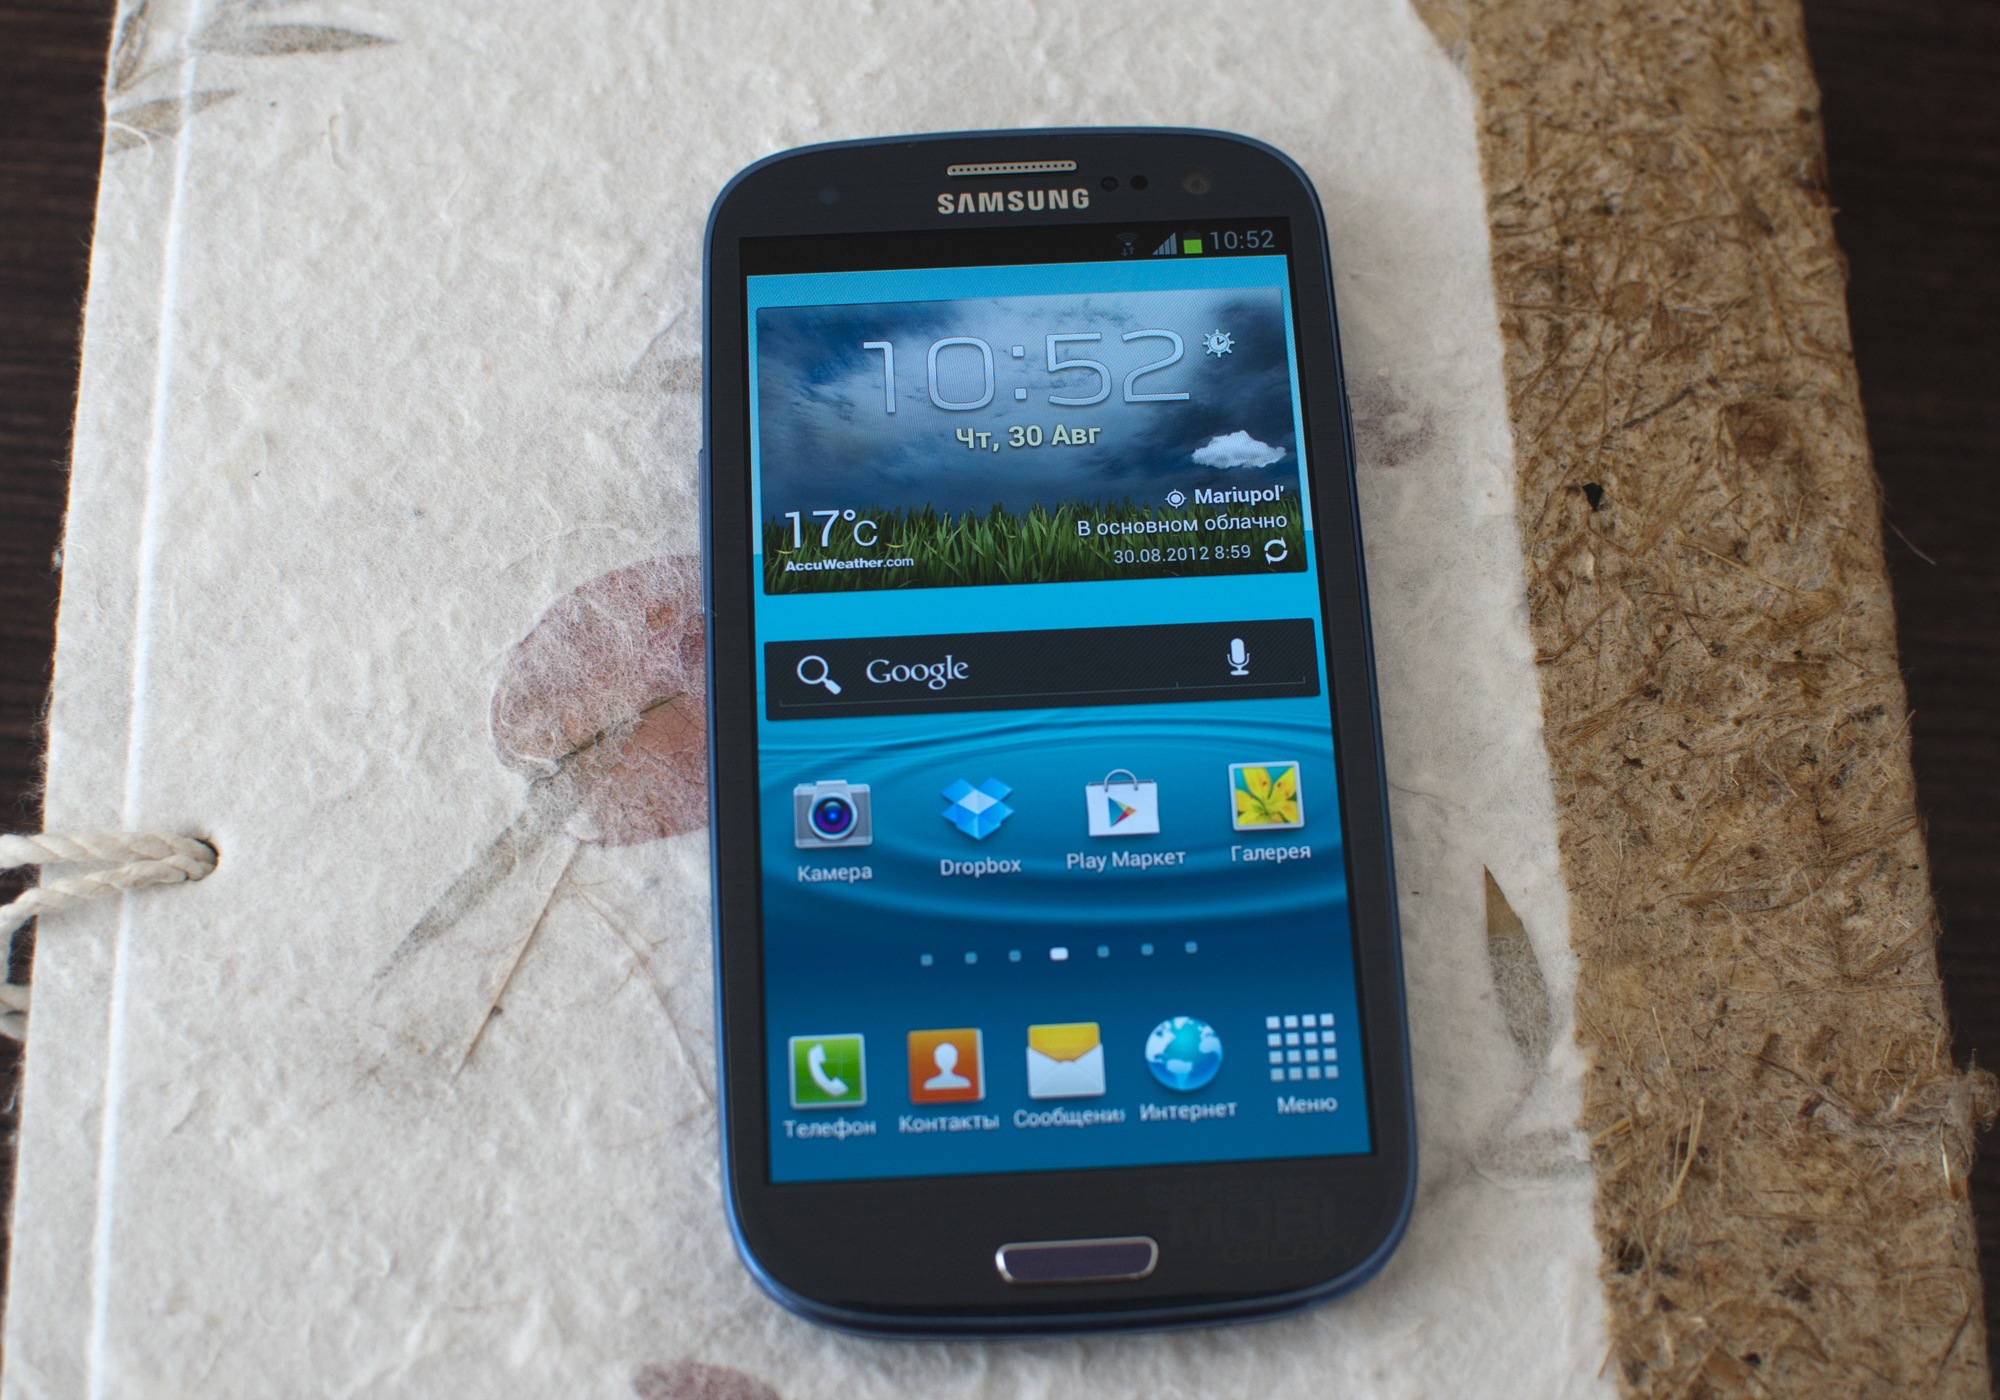 4pda galaxy 3. Samsung Galaxy s3 Duos. Samsung Galaxy s3 2012. Samsung Galaxy s3 i9300. Самсунг с3 мини дуос.